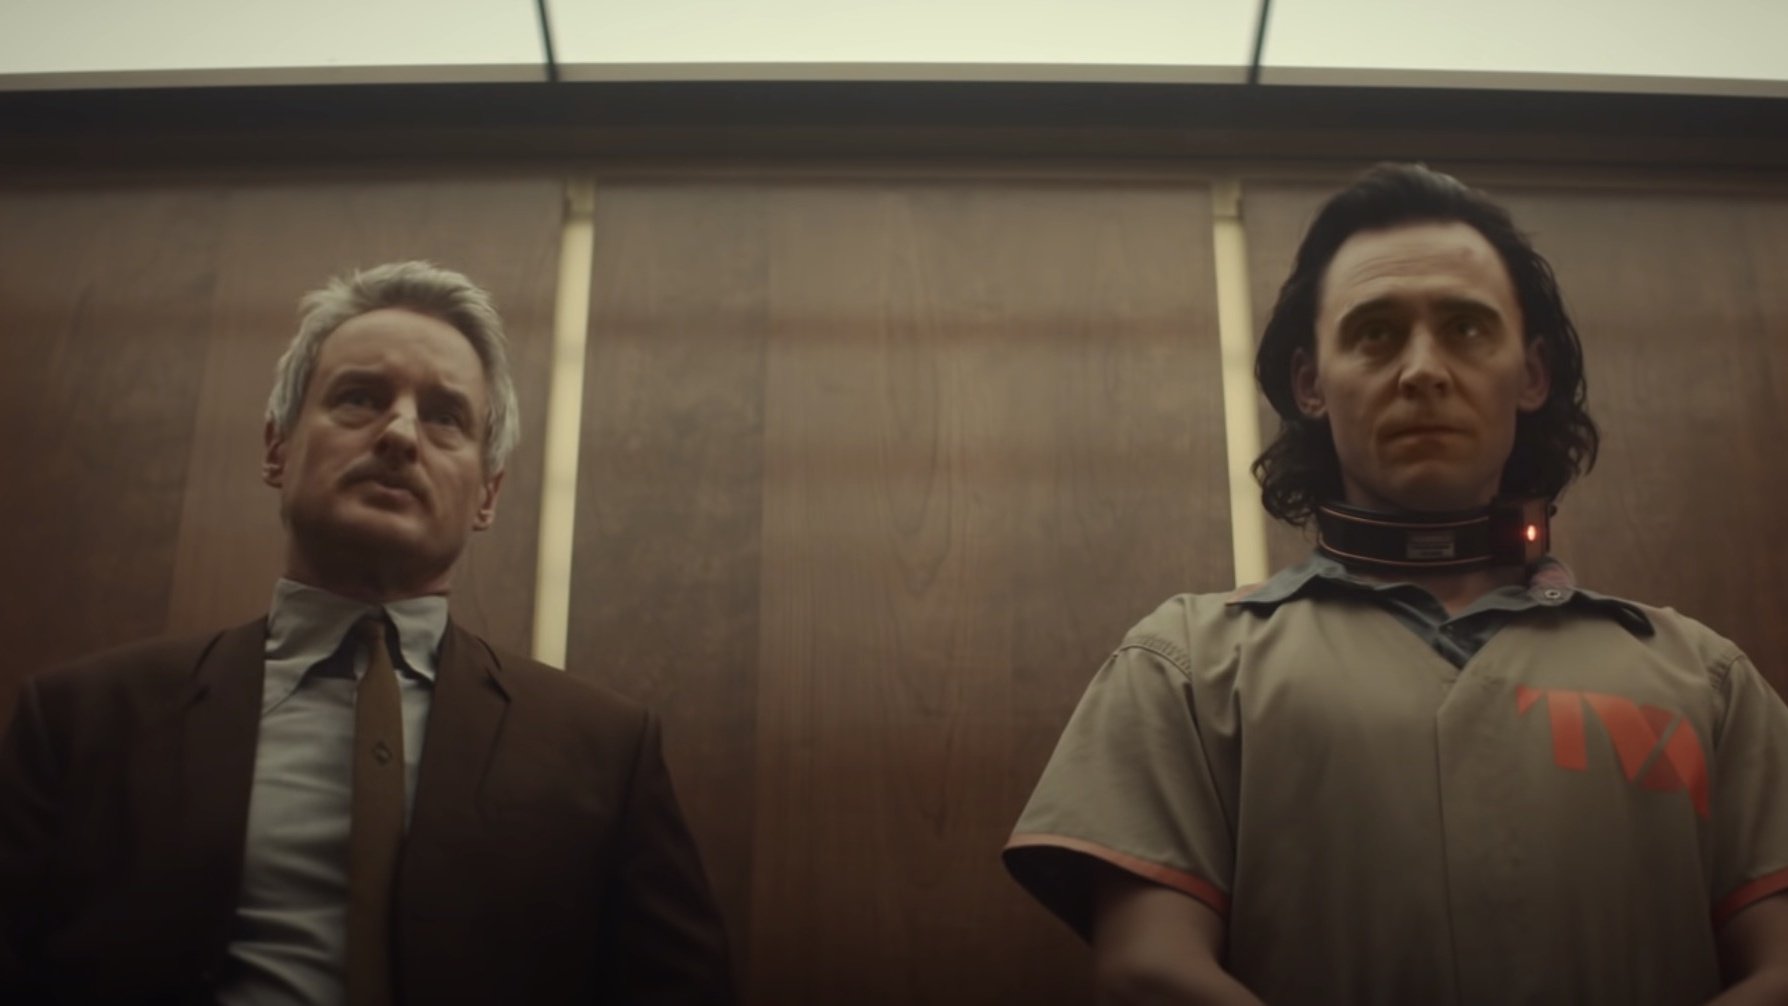 Mobius interpretato da Owen Wilson e Loki interpretato da Tom Hiddleston erano in ascensore.